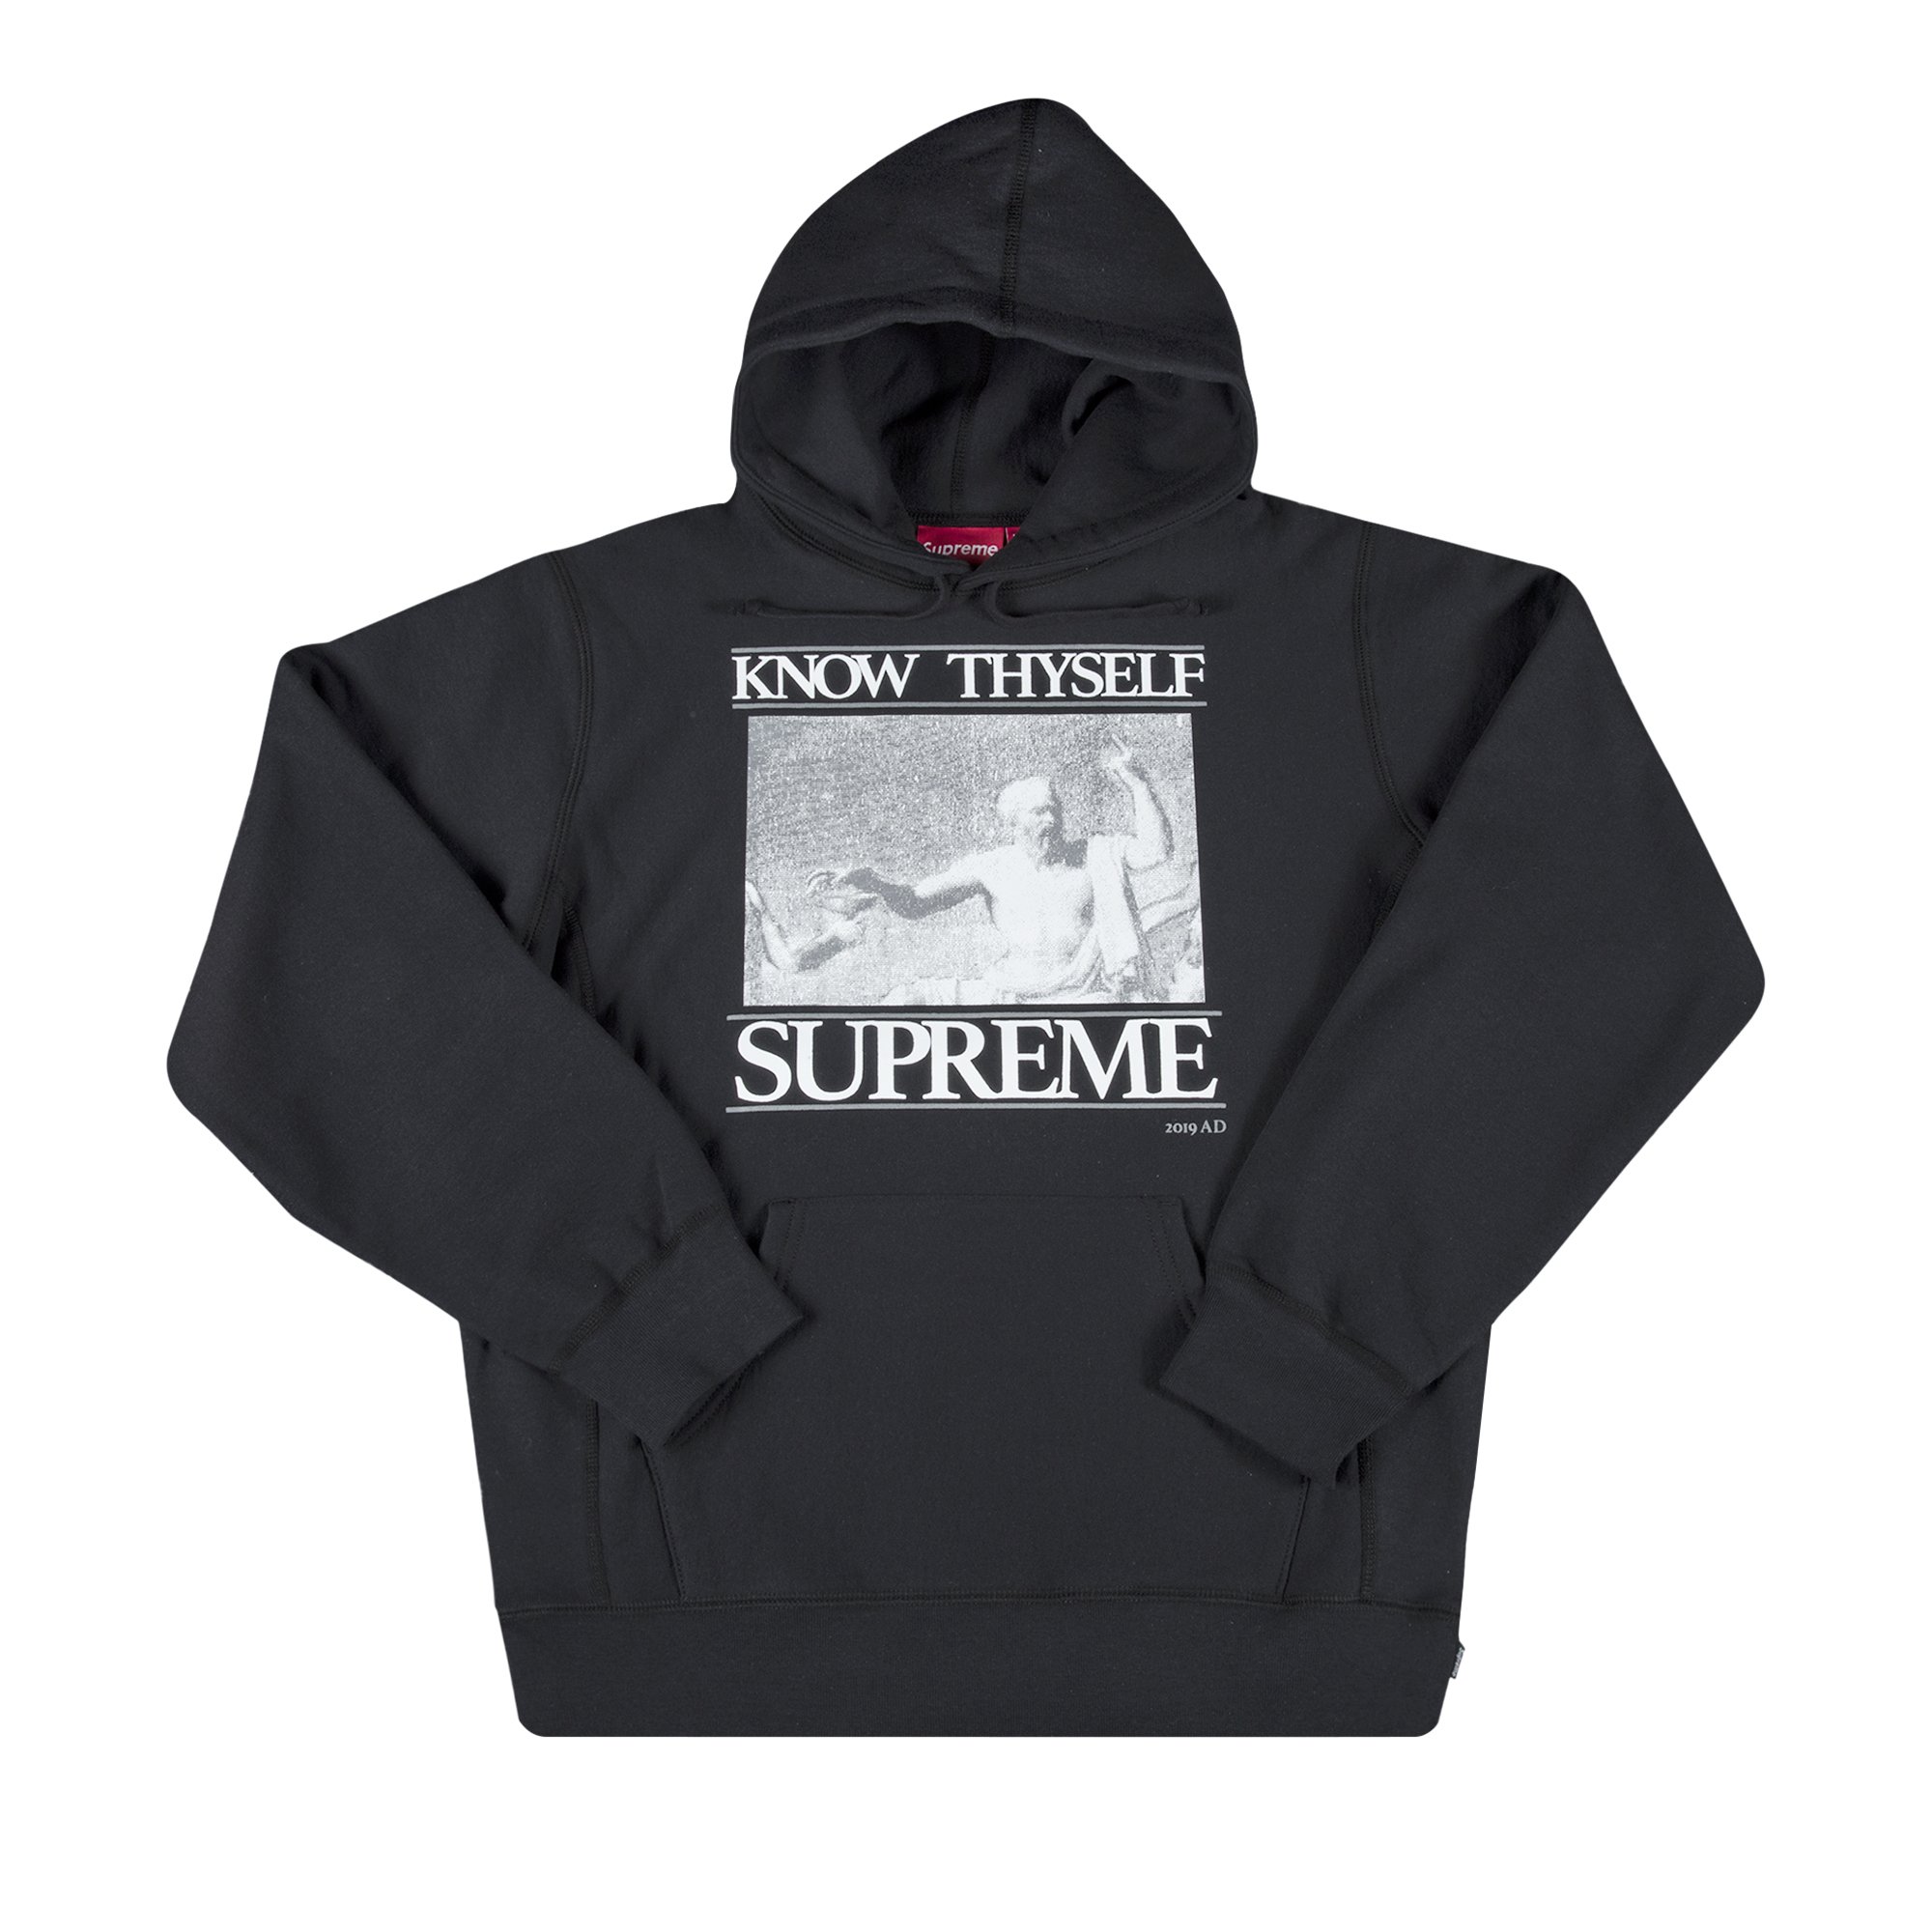 Buy Supreme Know Thyself Hooded Sweatshirt 'Black' - SS19SW85